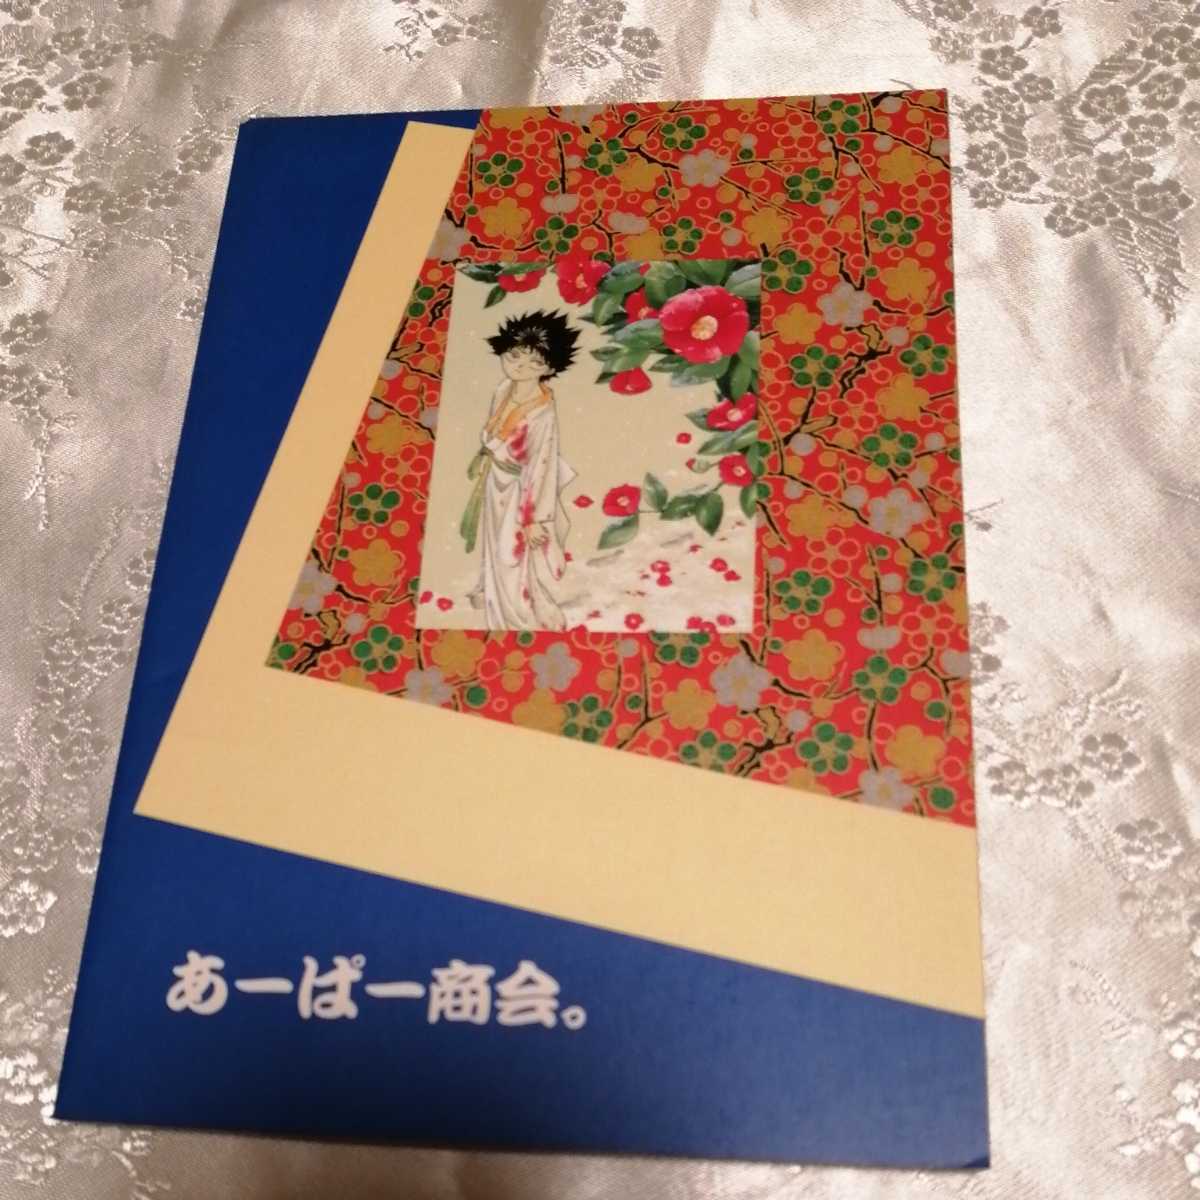  Yu Yu Hakusho журнал узкого круга литераторов komikeBL магазин лошадь ×....×...×..[ час. .]. река ....... короткий сборник not. кимоно. 